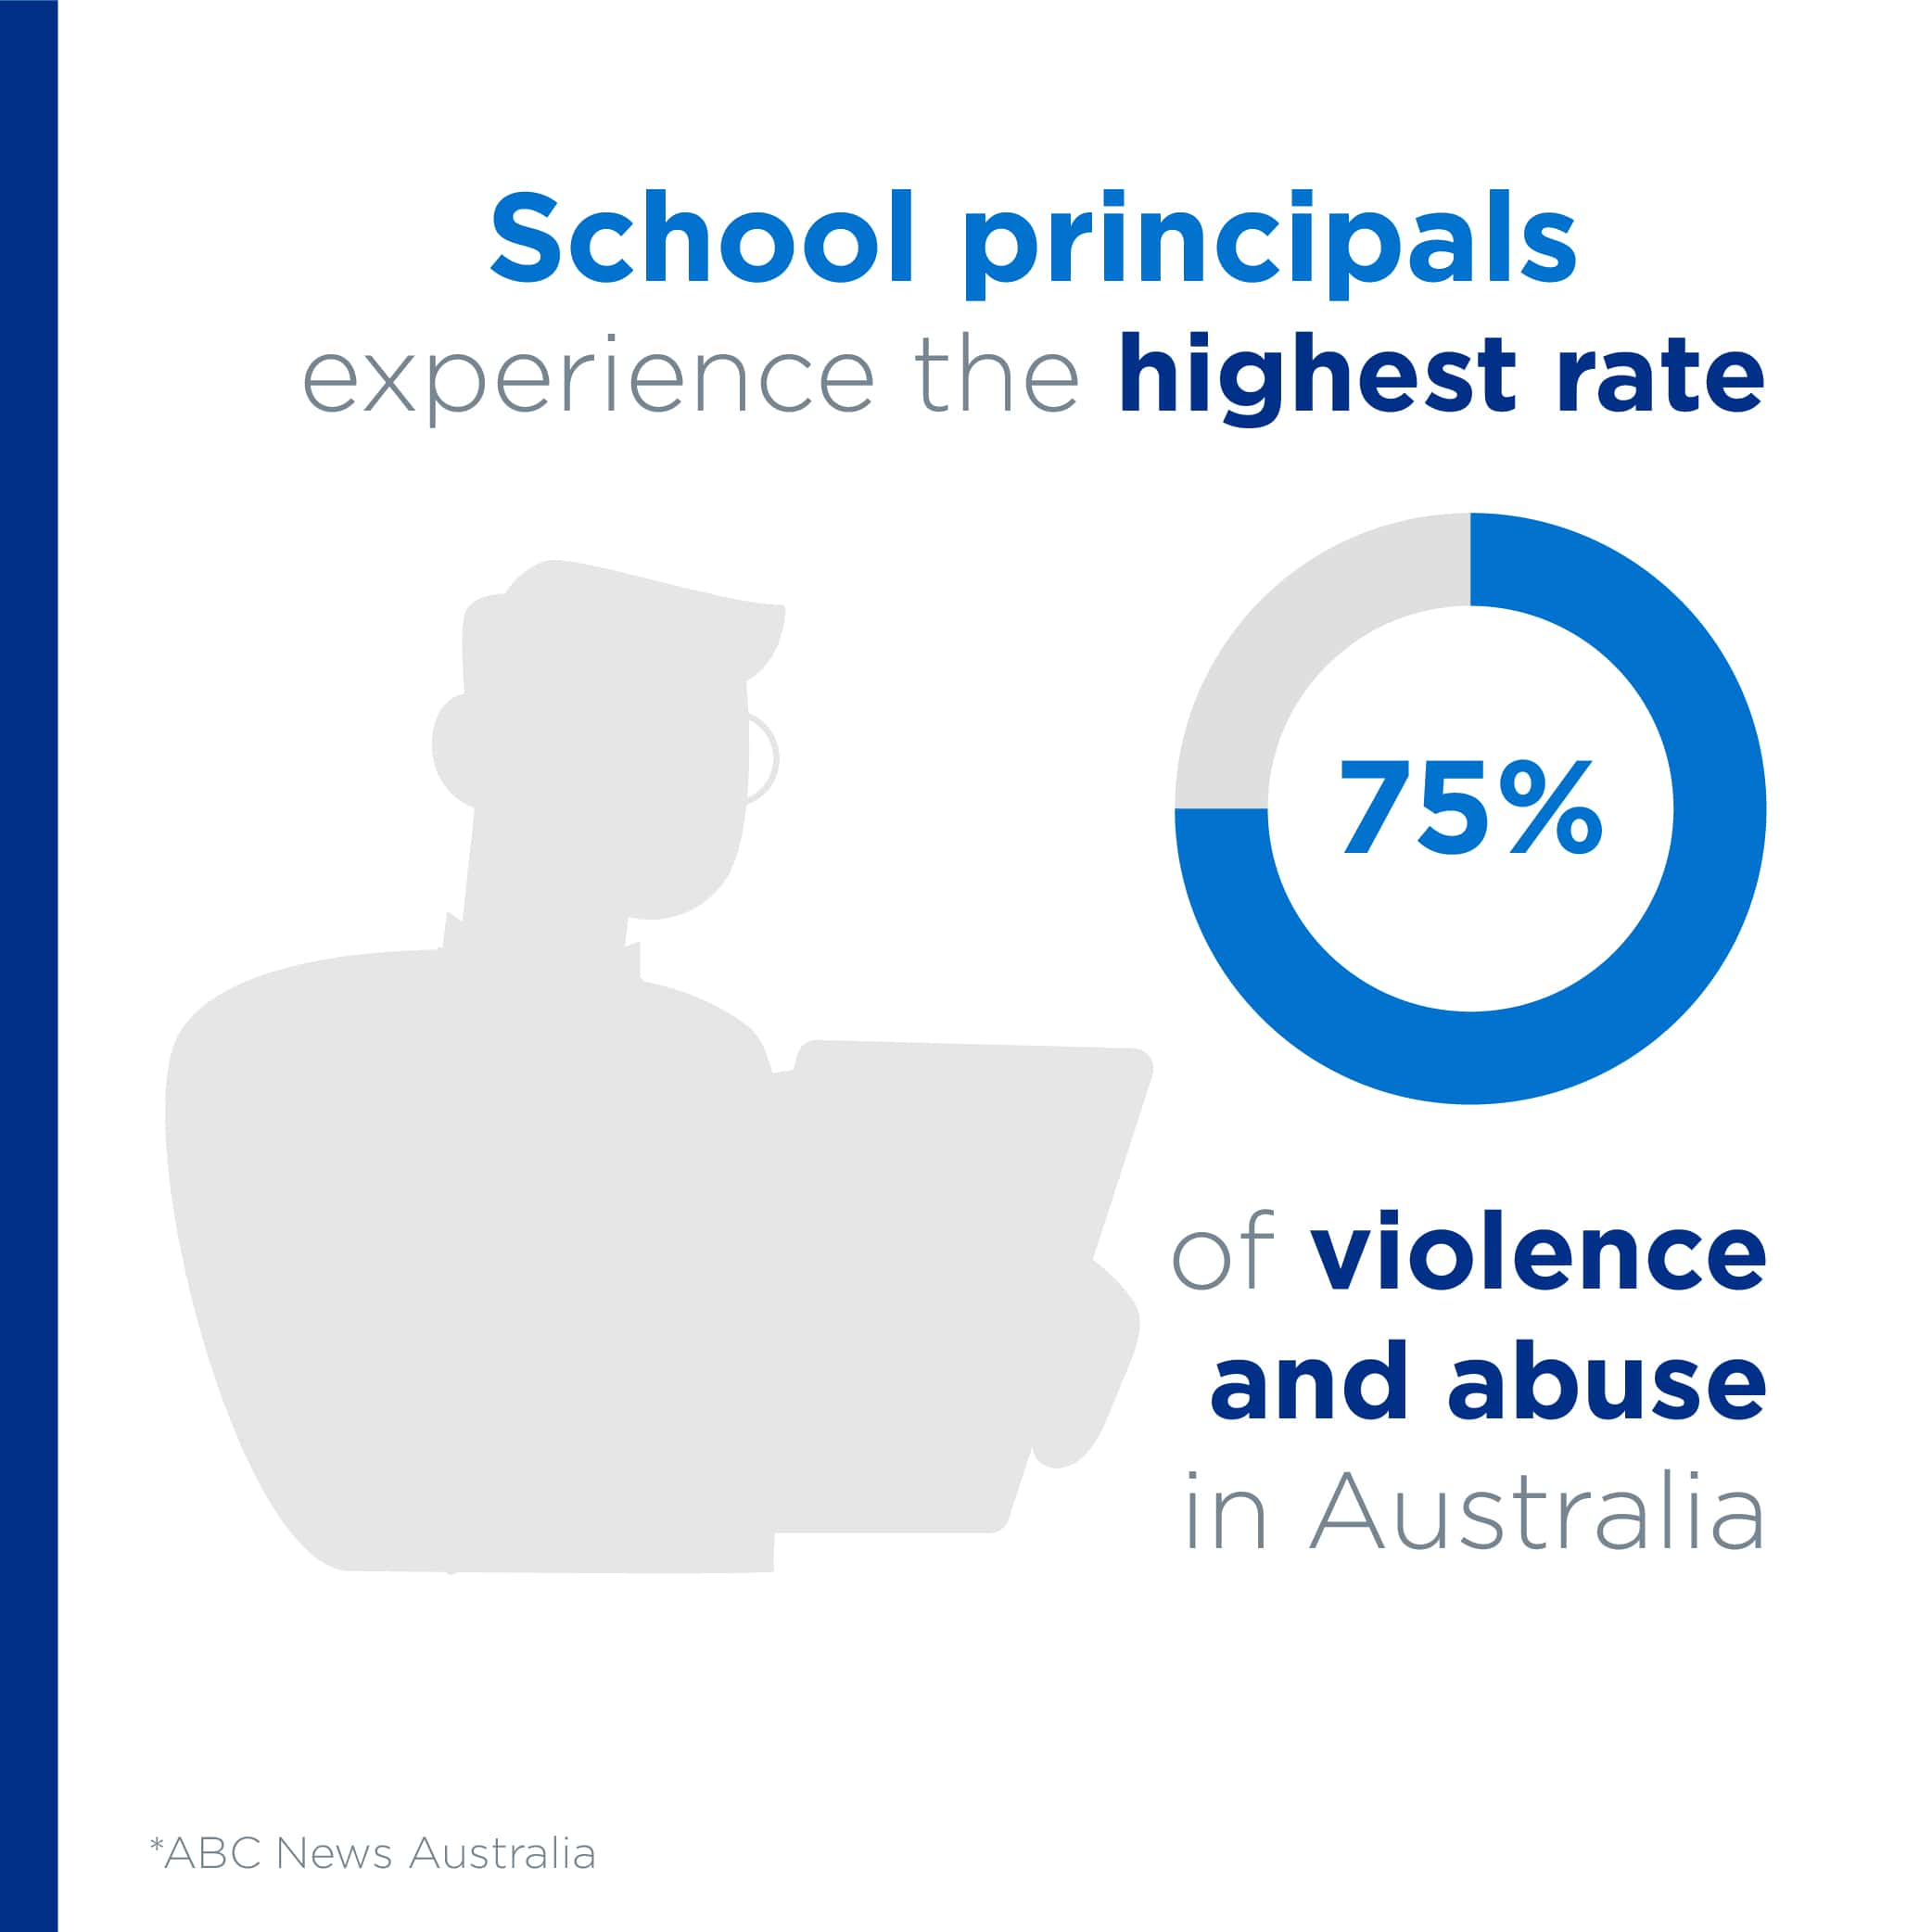 violence abuse in Australian schools